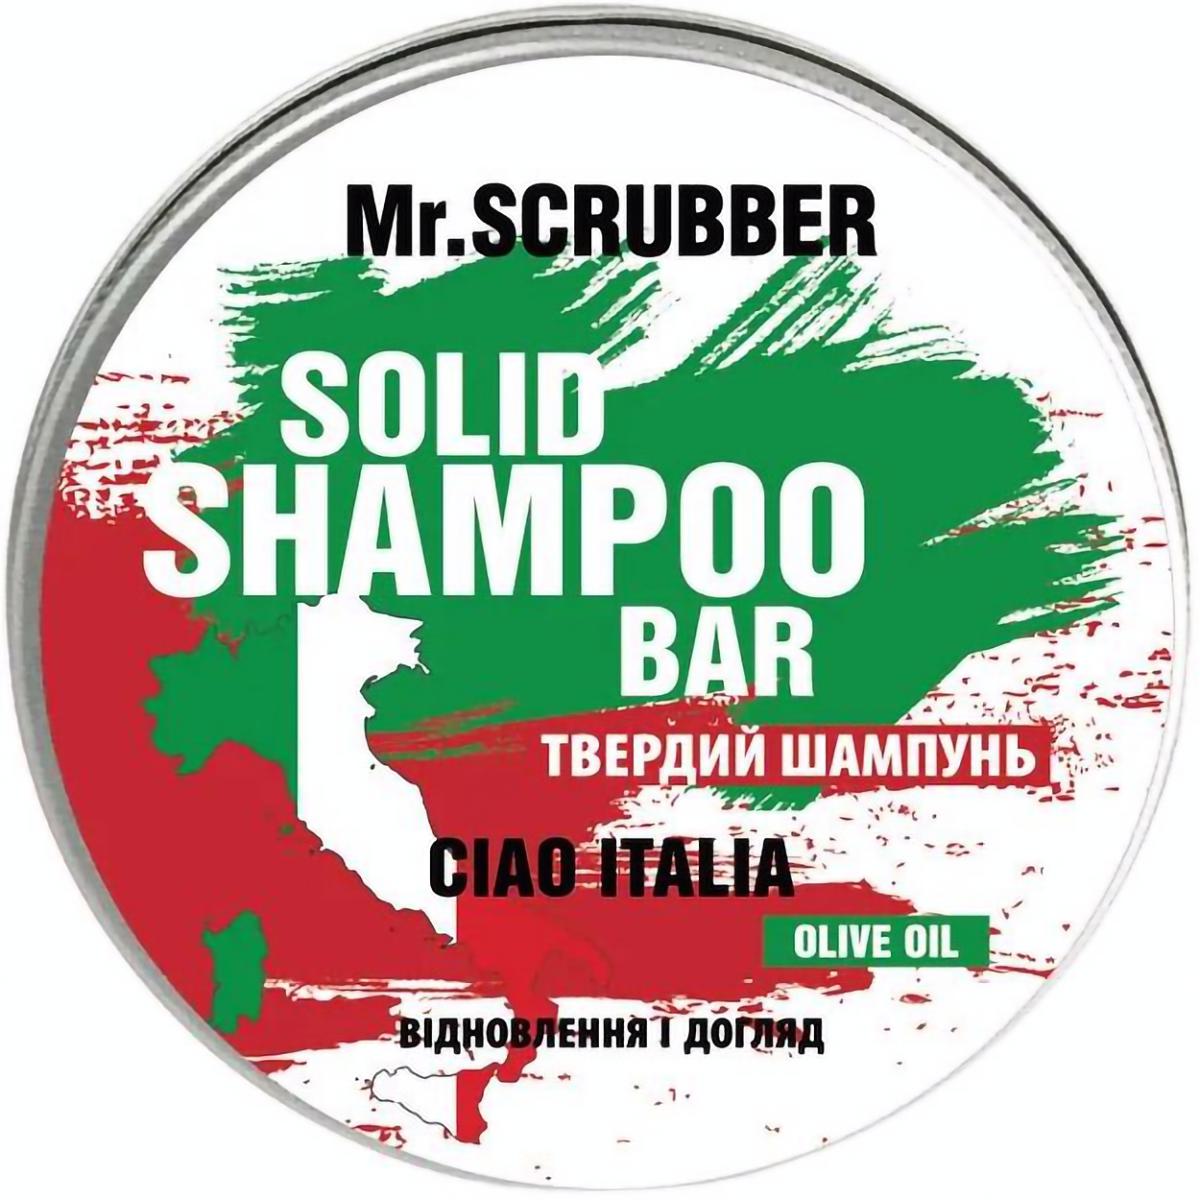 Твердый шампунь Mr.Scrubber Ciao Italia, 70 г - фото 1